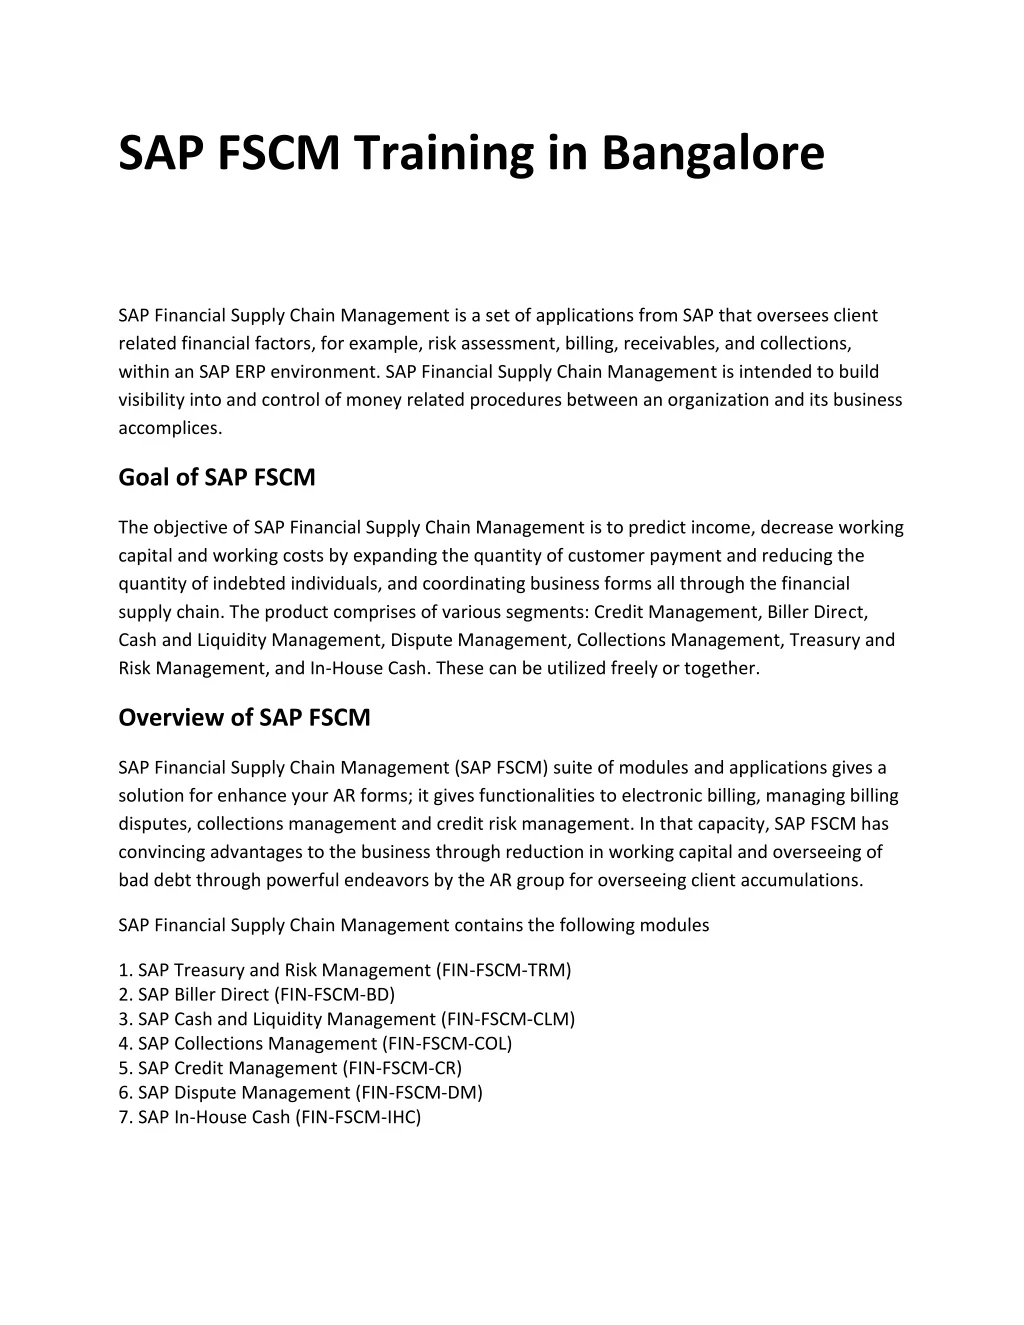 sap fscm training in bangalore